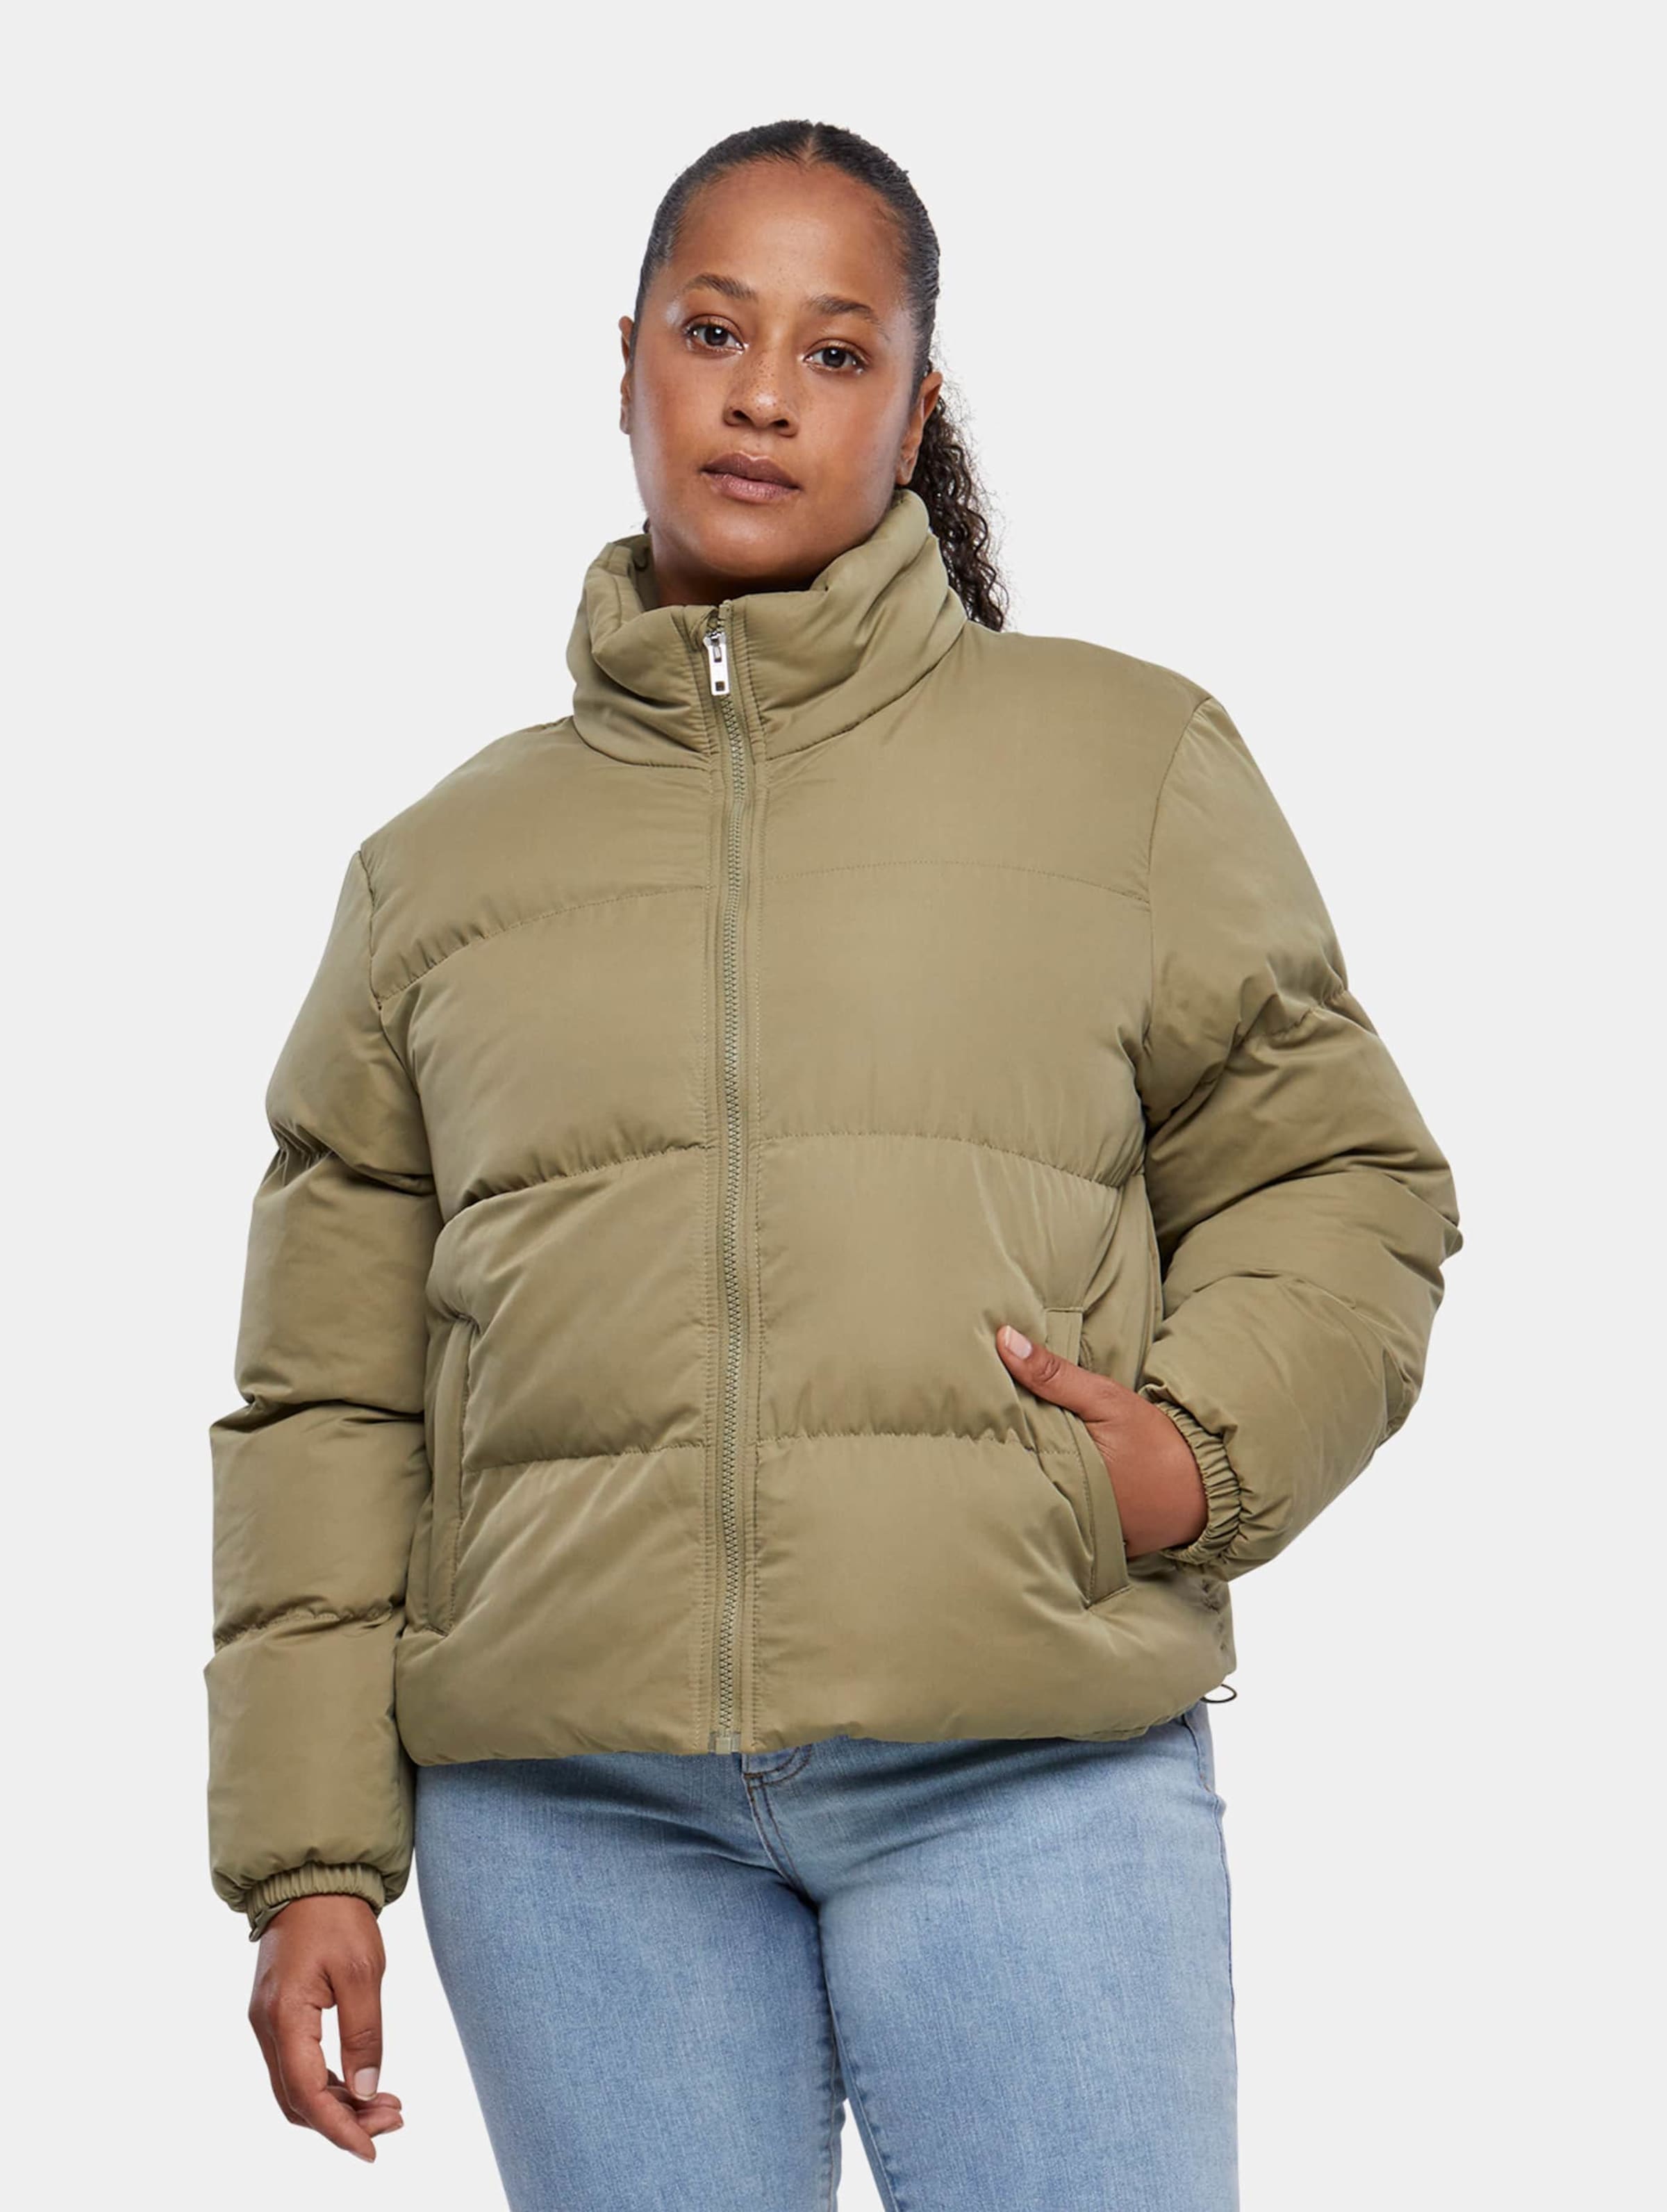 Urban Classics - Ladies Short Peached Puffer Jacket tiniolive 3XL Puffer jacket - 3XL - Olijfgroen